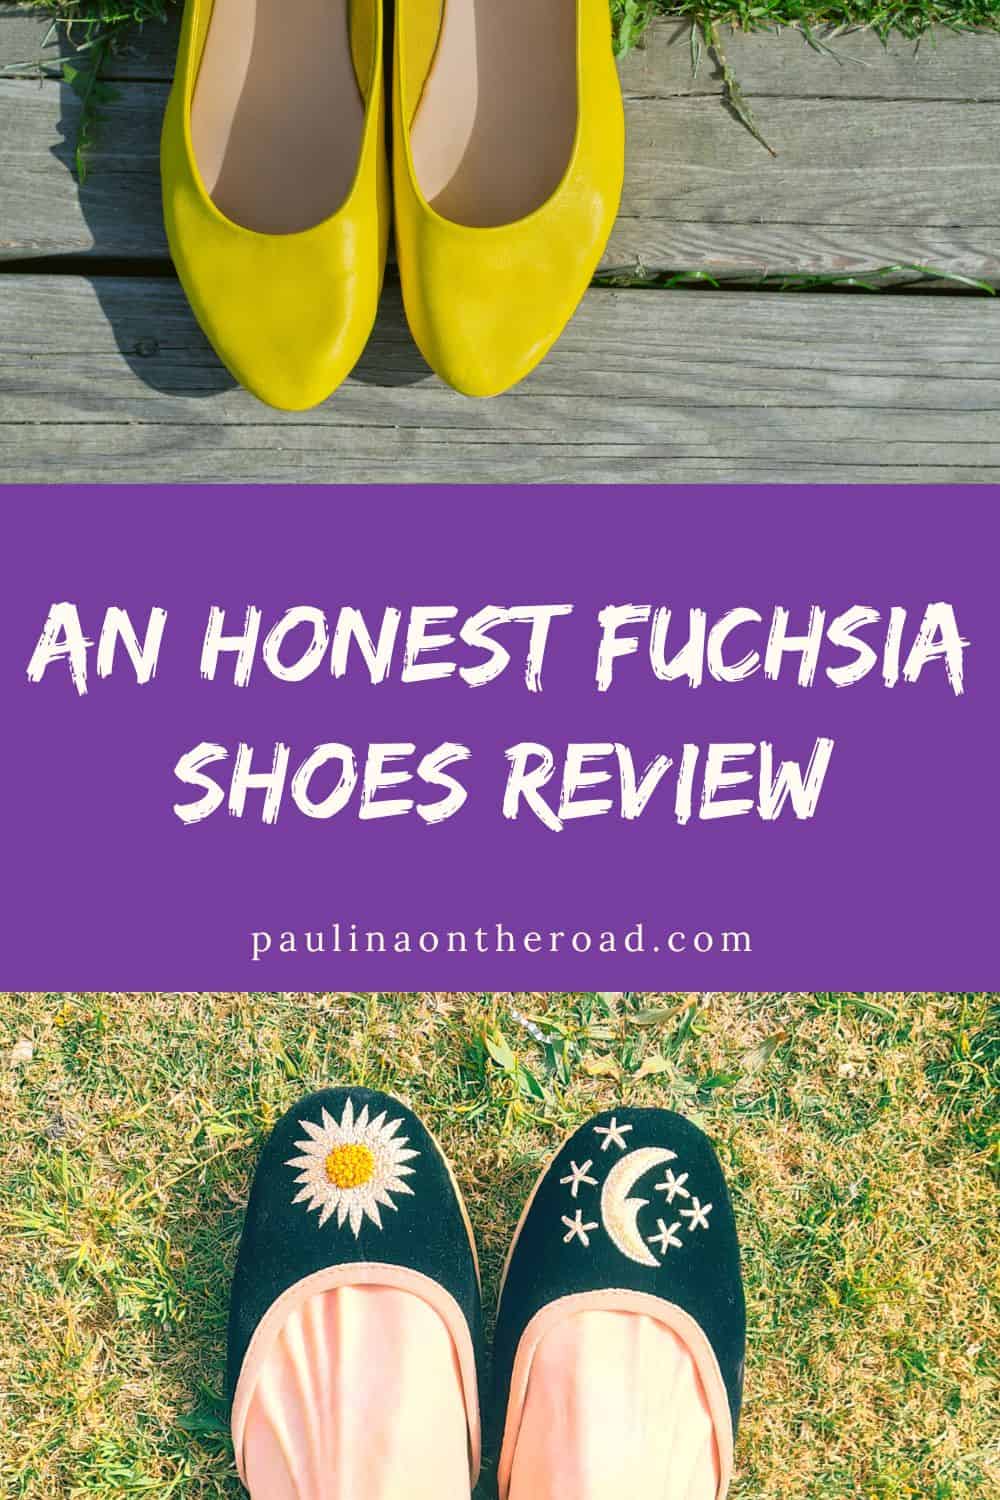 Fuchsia Shoes Review 